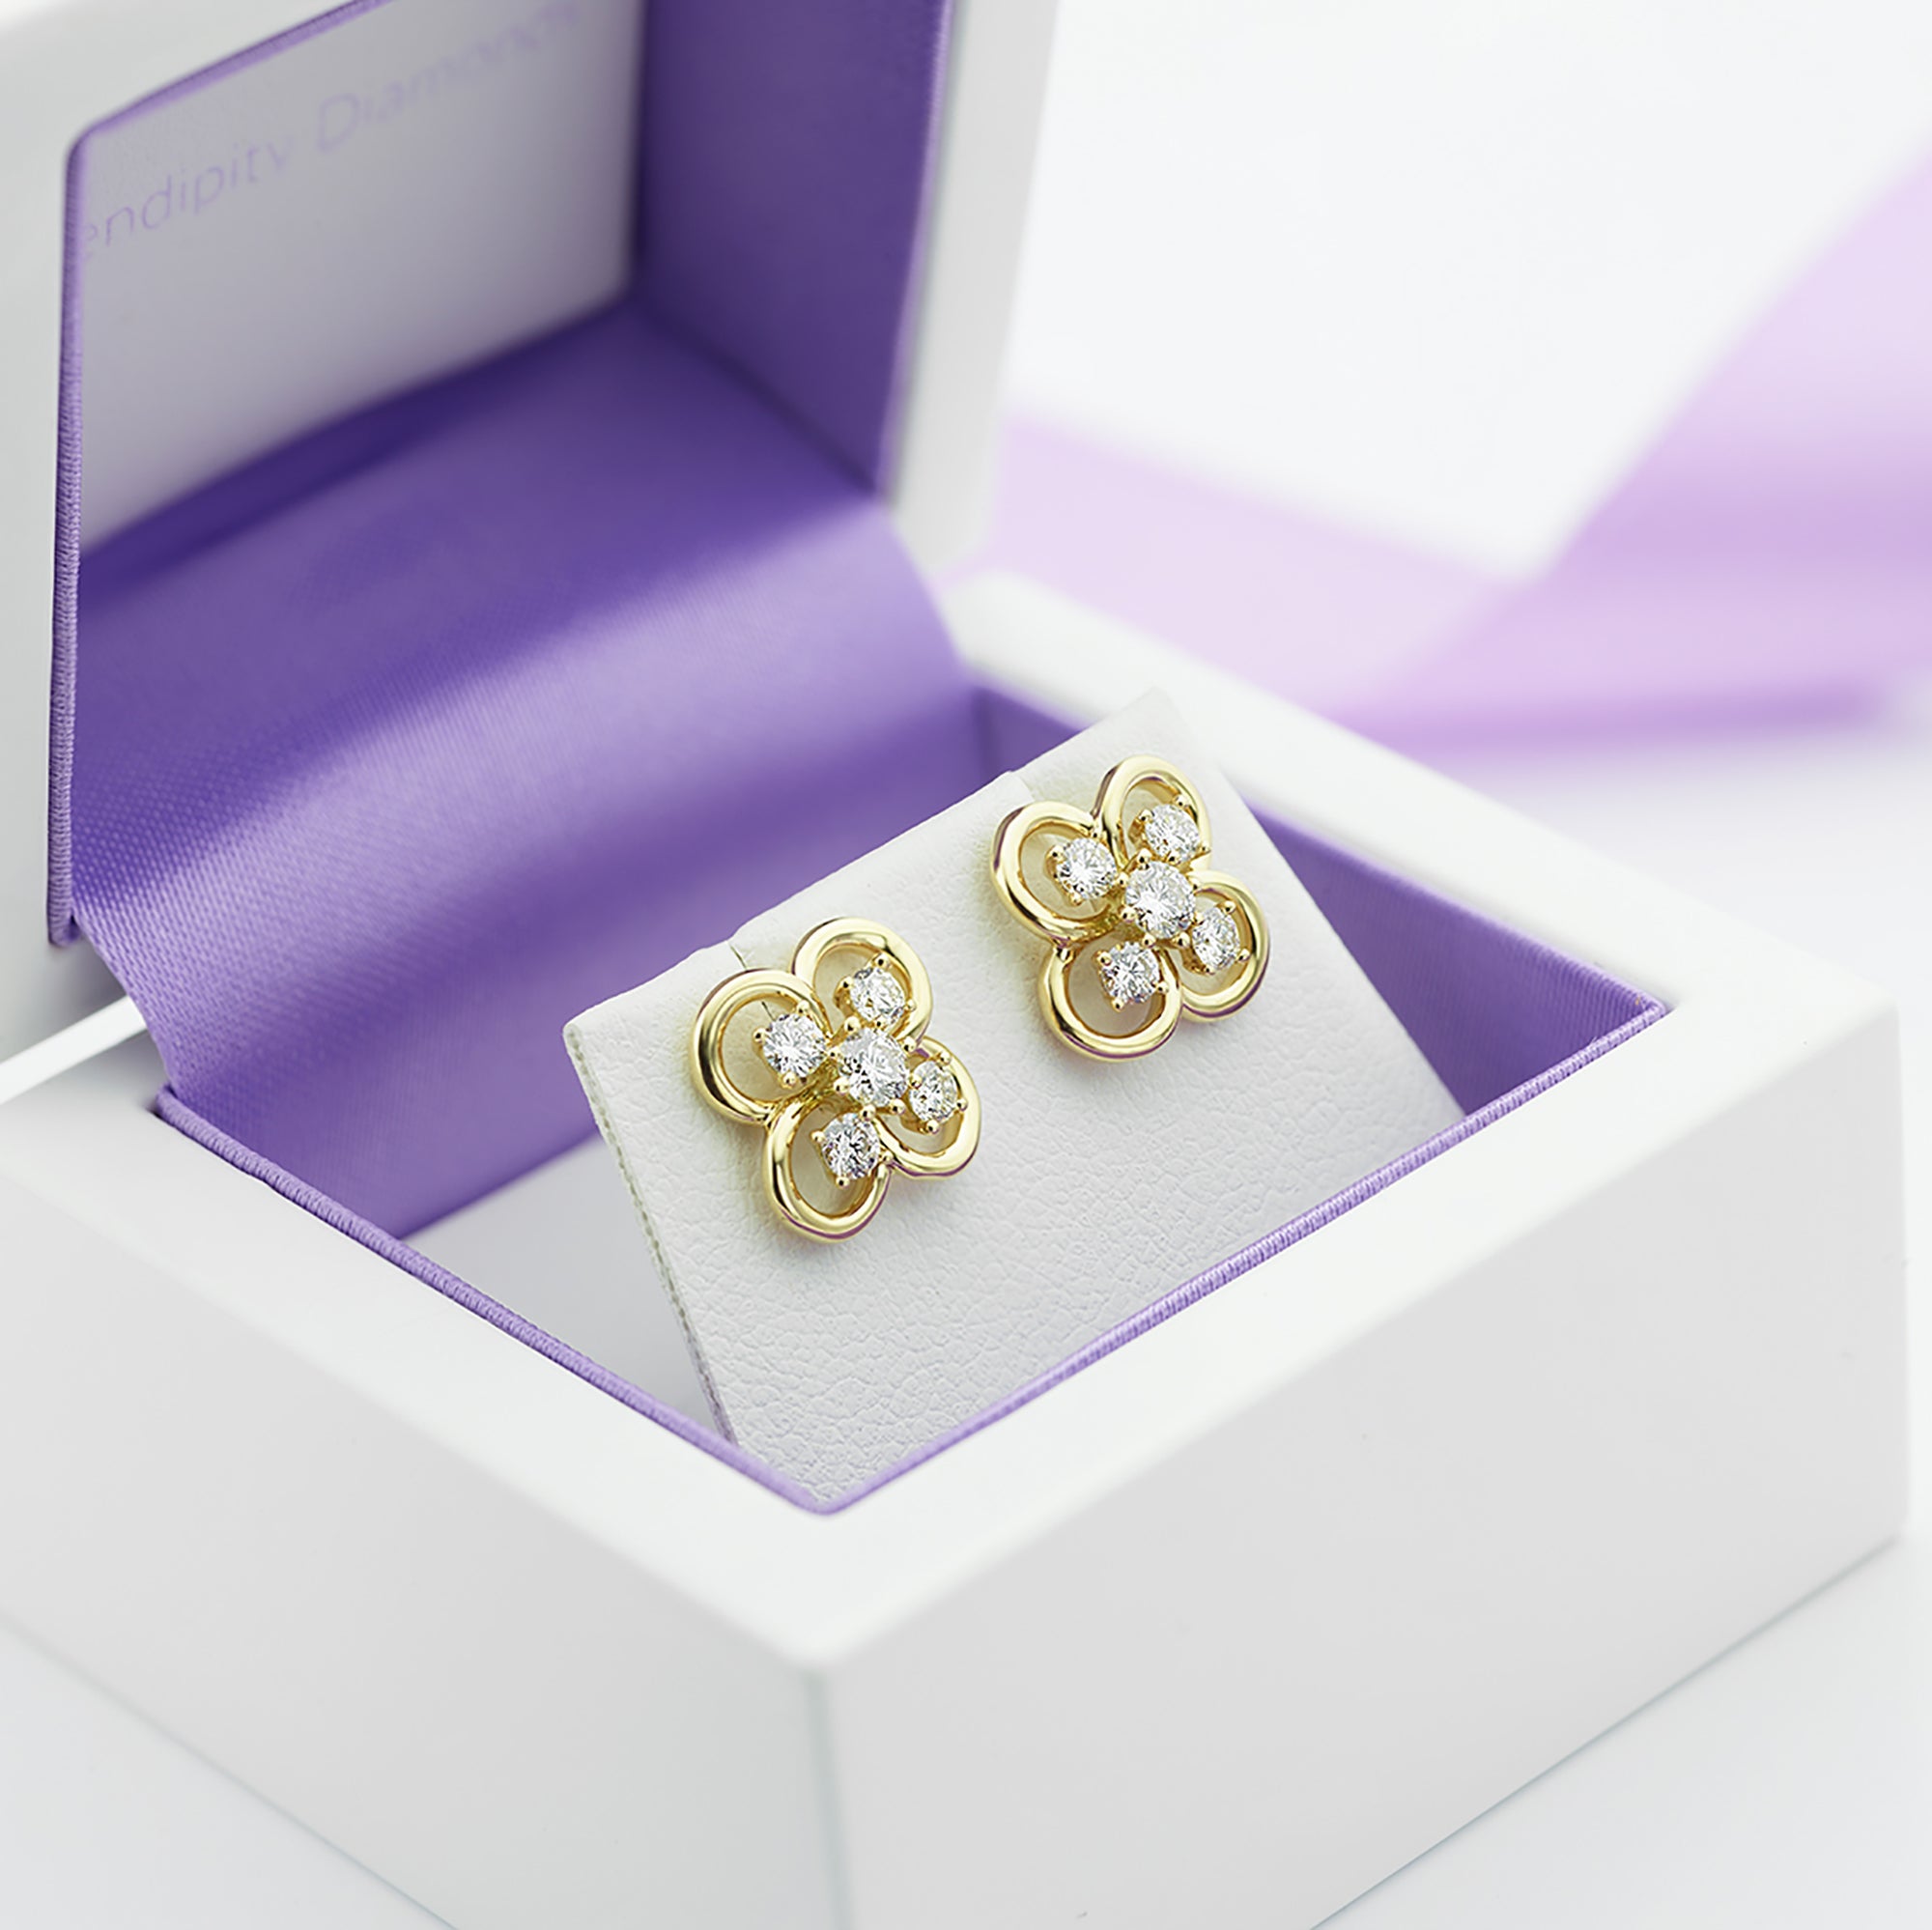 Blossom 5 stone diamond earrings in their box